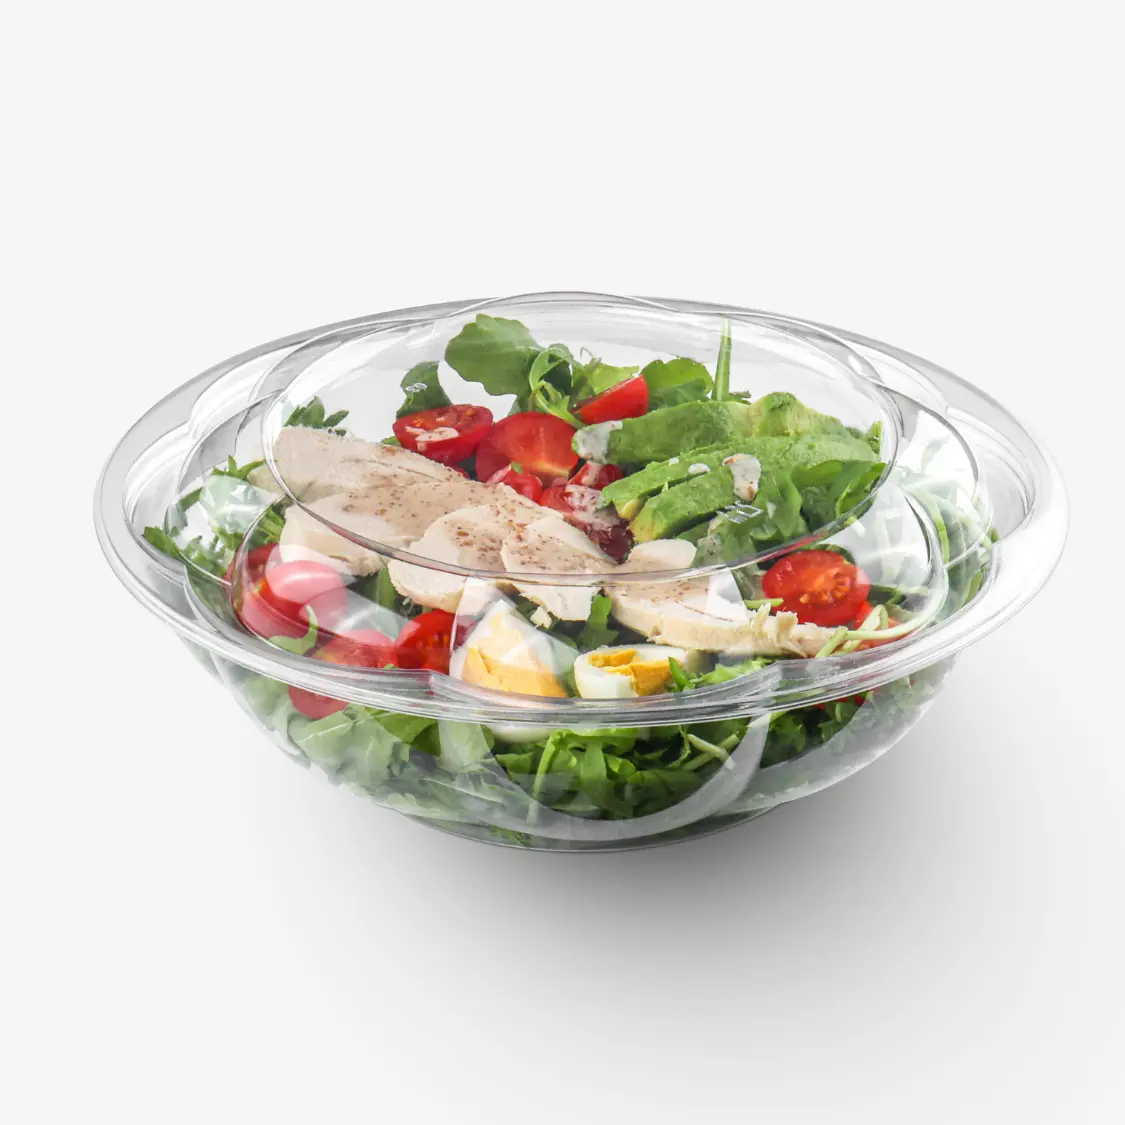 Selamat datang untuk menyesuaikan 18OZ 24OZ 32OZ 64OZ plastik kotak buah dan sayuran, RPET mangkuk salad sekali pakai